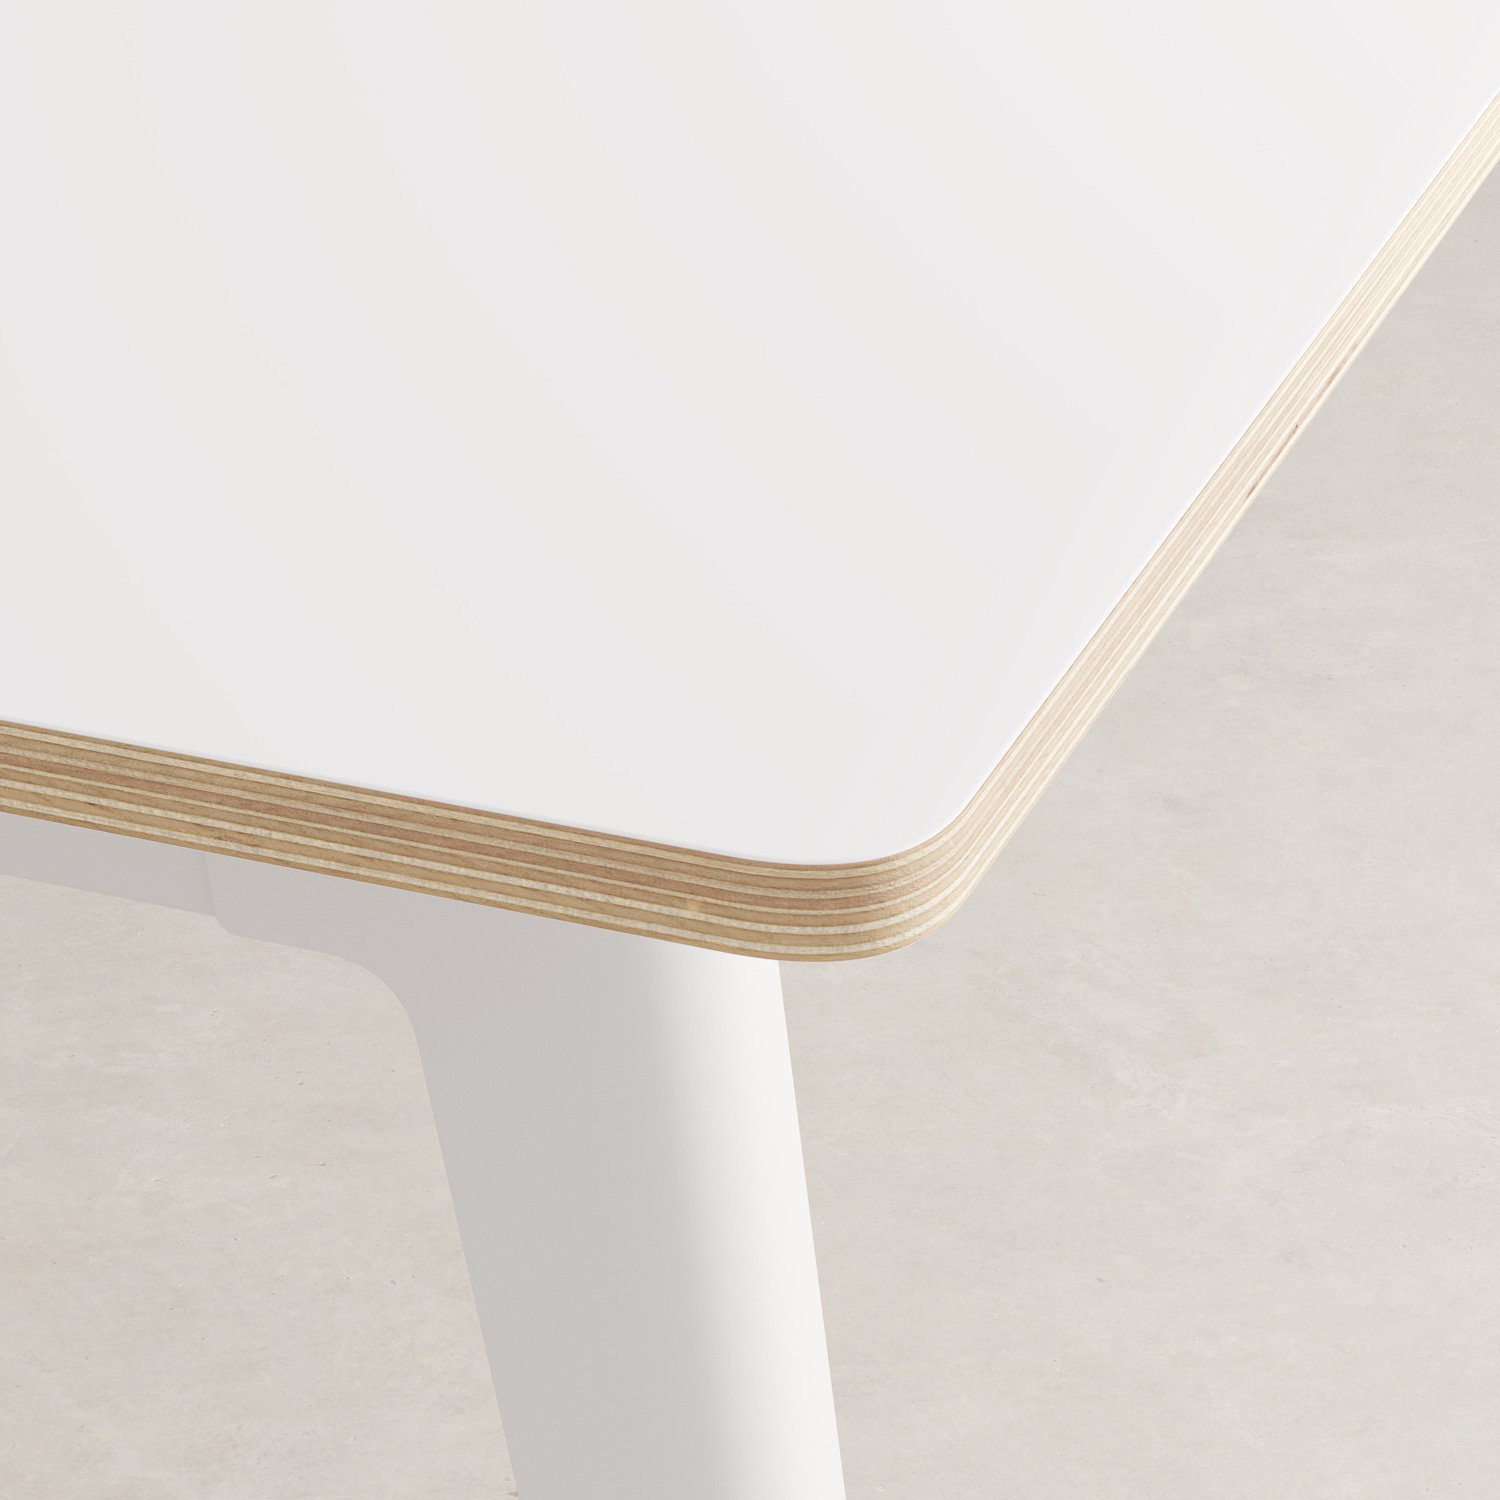 NEW MODERN 2–seater workbench – white plywood